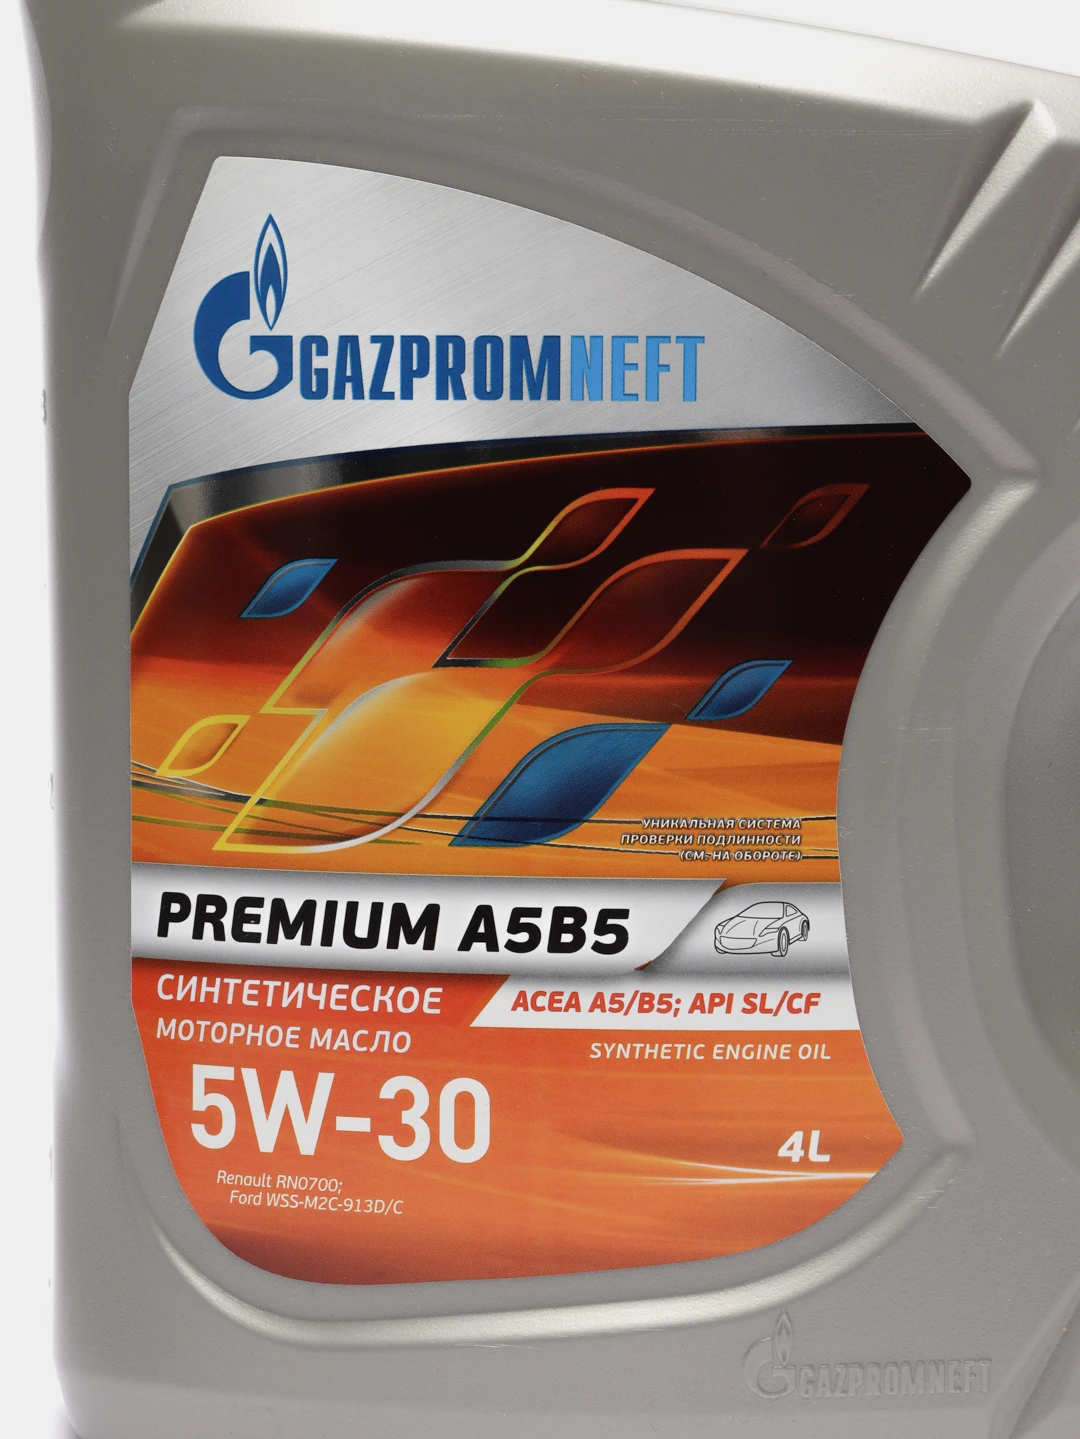 Масло gazpromneft premium 5w 30. 253142585 Gazpromneft Premium a5 b5 5w-30 4l. Gazpromneft Premium a5b5 5w-30 1 л. Масло Gazpromneft Premium a5b5 5w-30 4л.